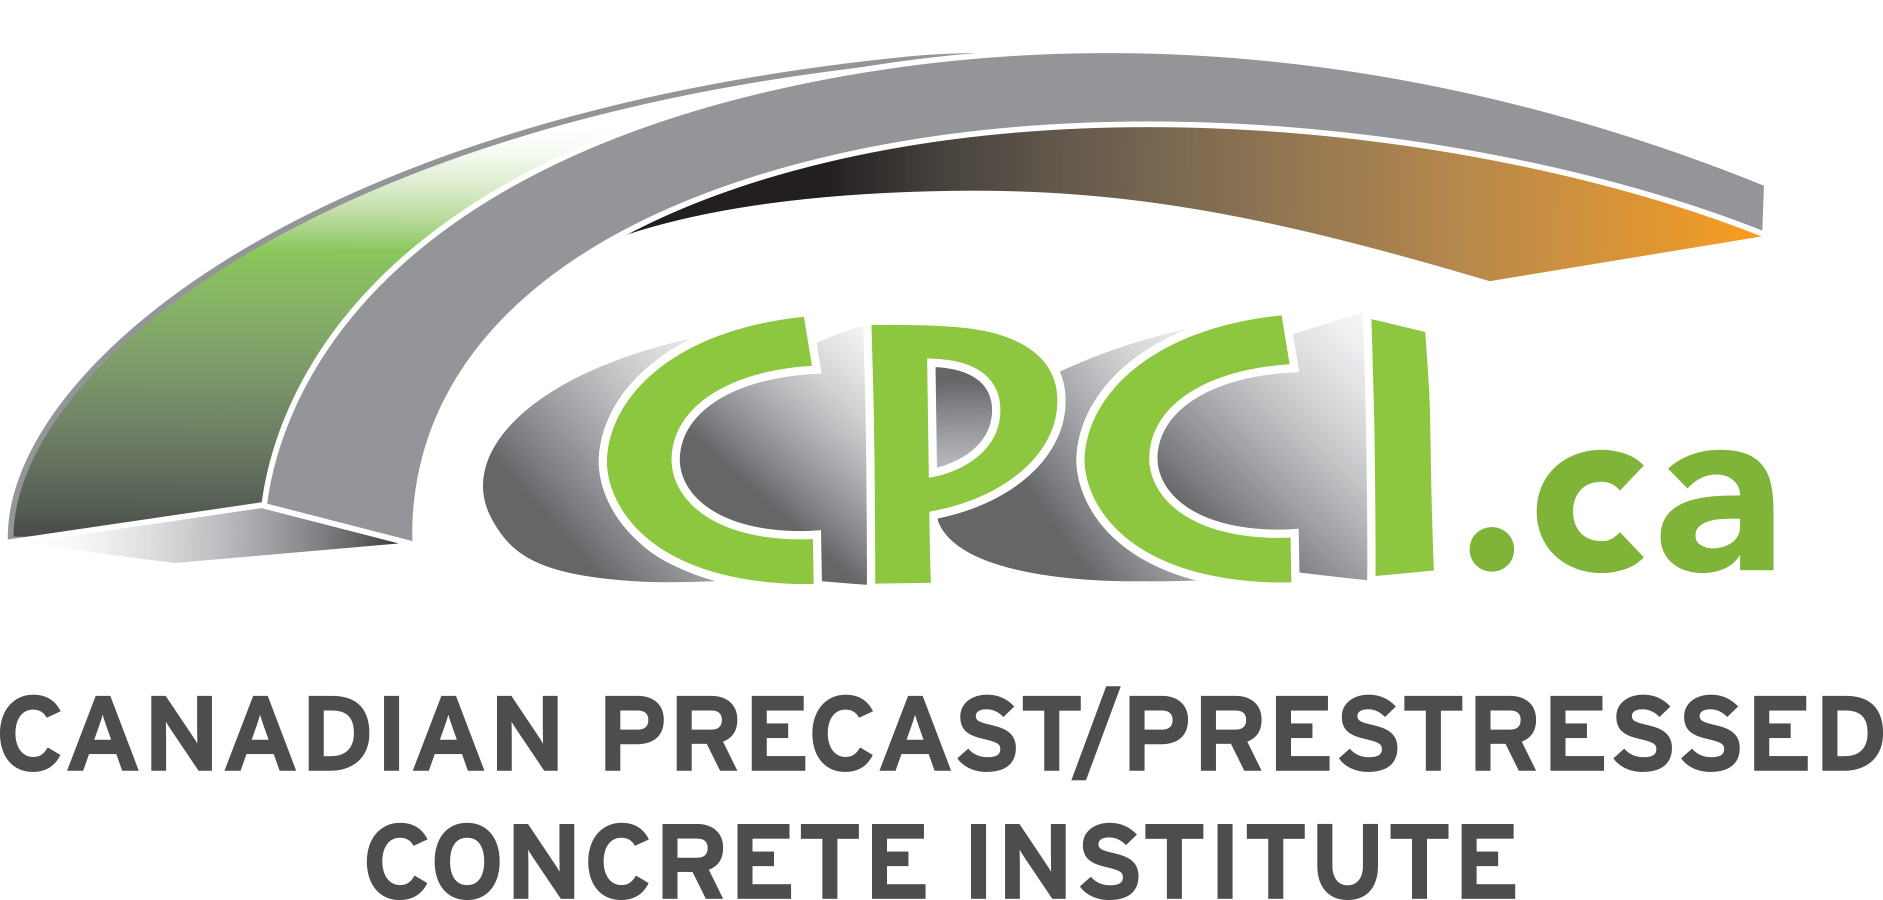 CPCI logo